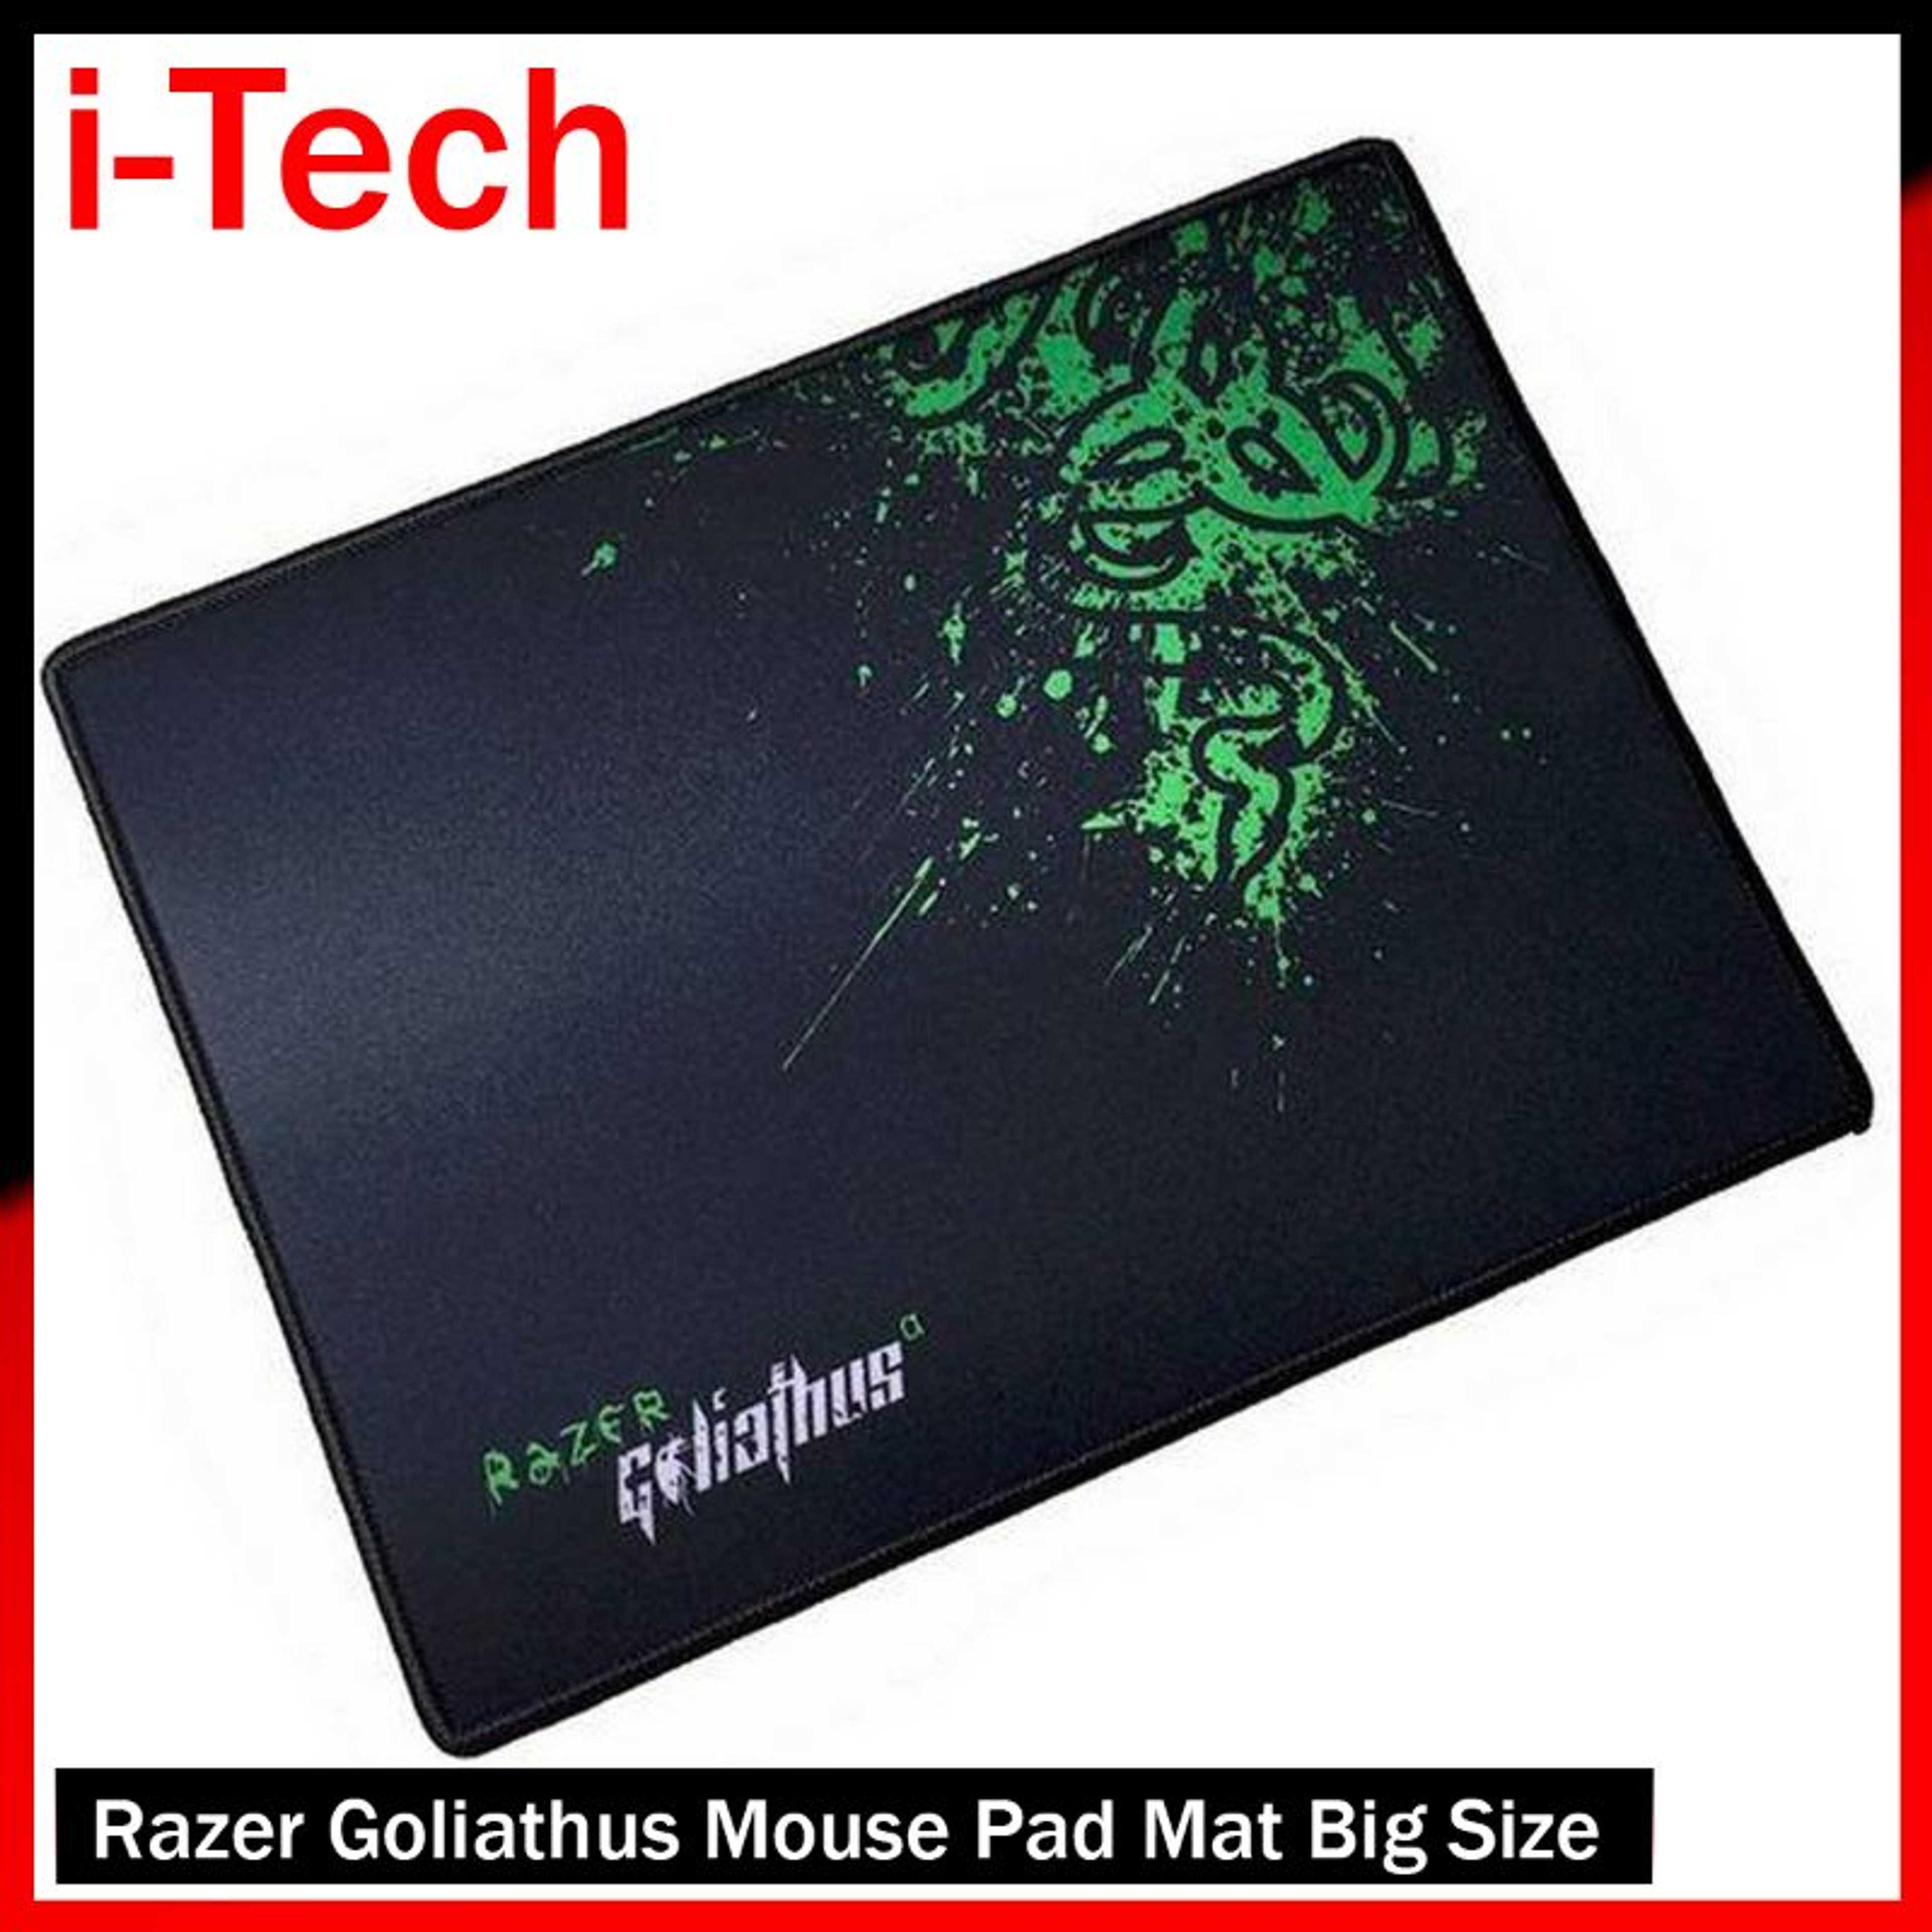 Razer Goliathus Mouse Pad Mat Big Size